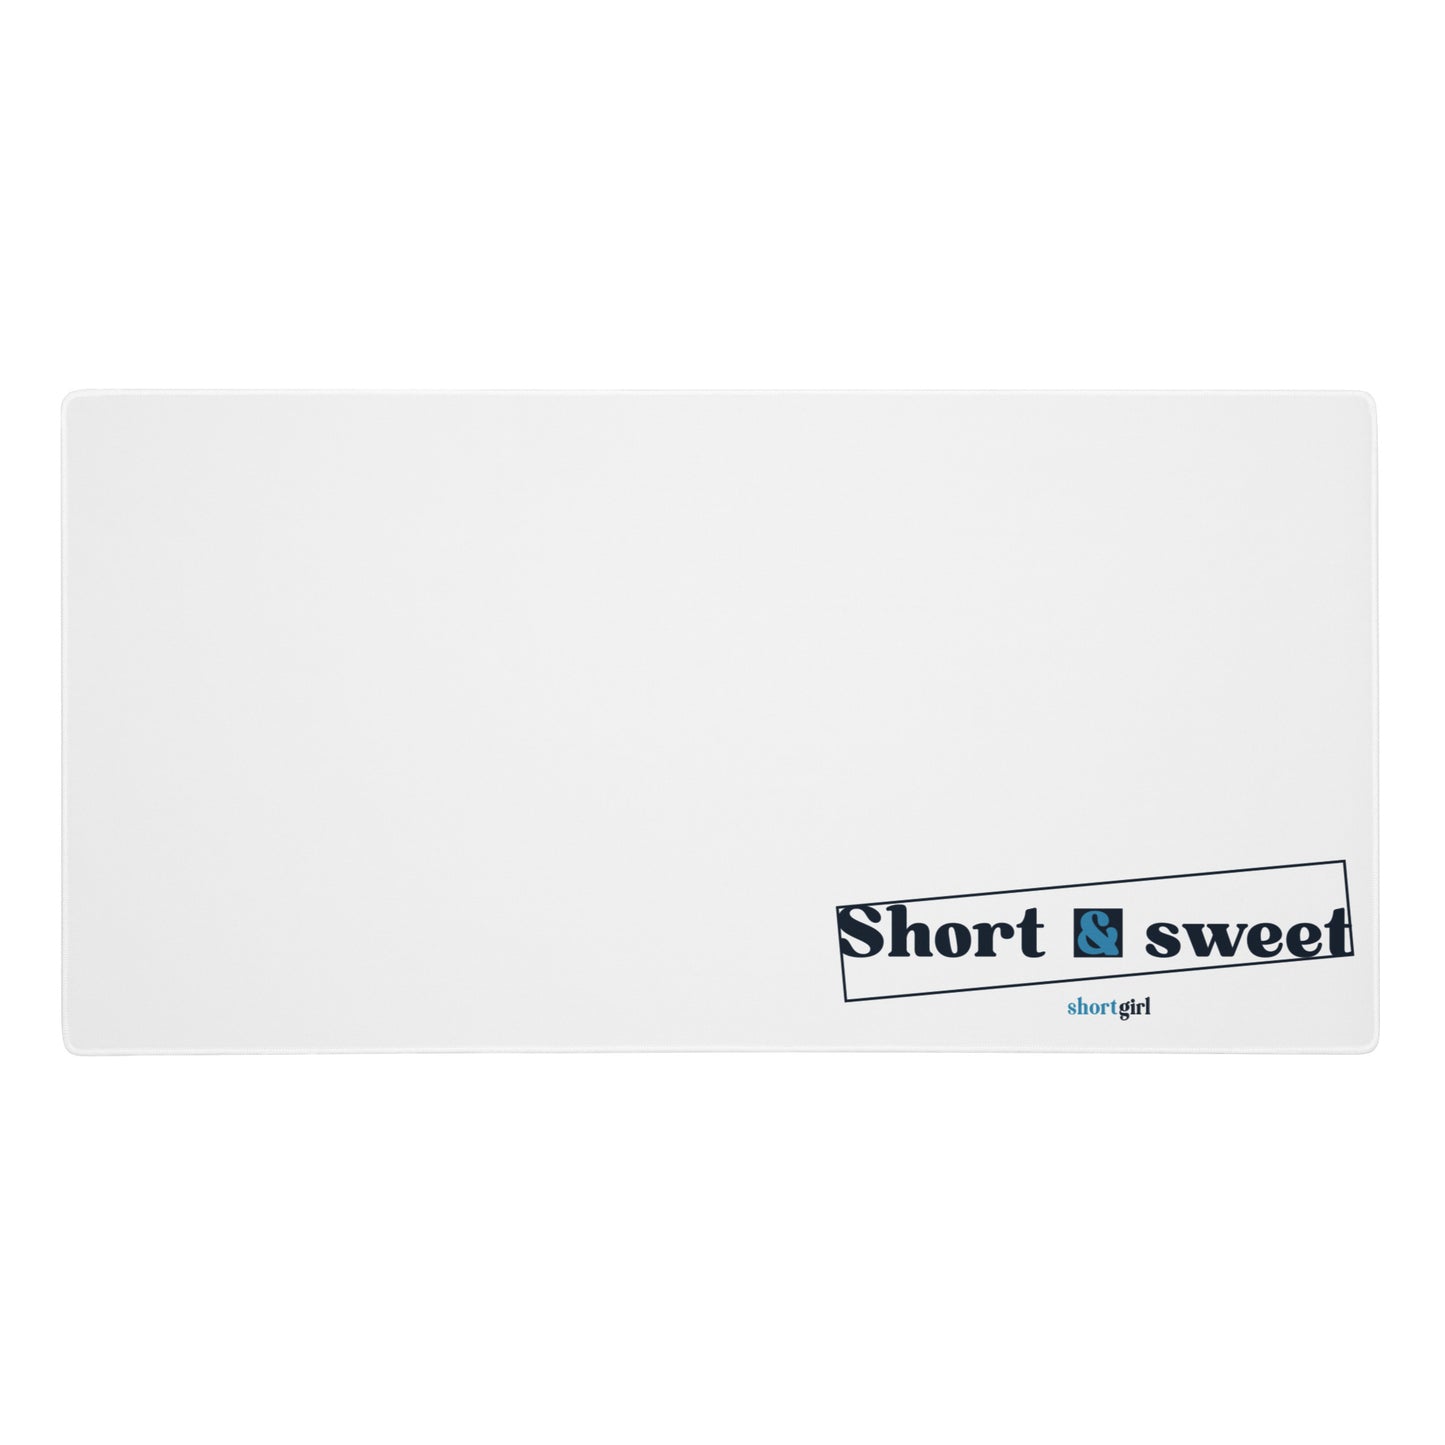 Short girl mouse pad - Short & sweet